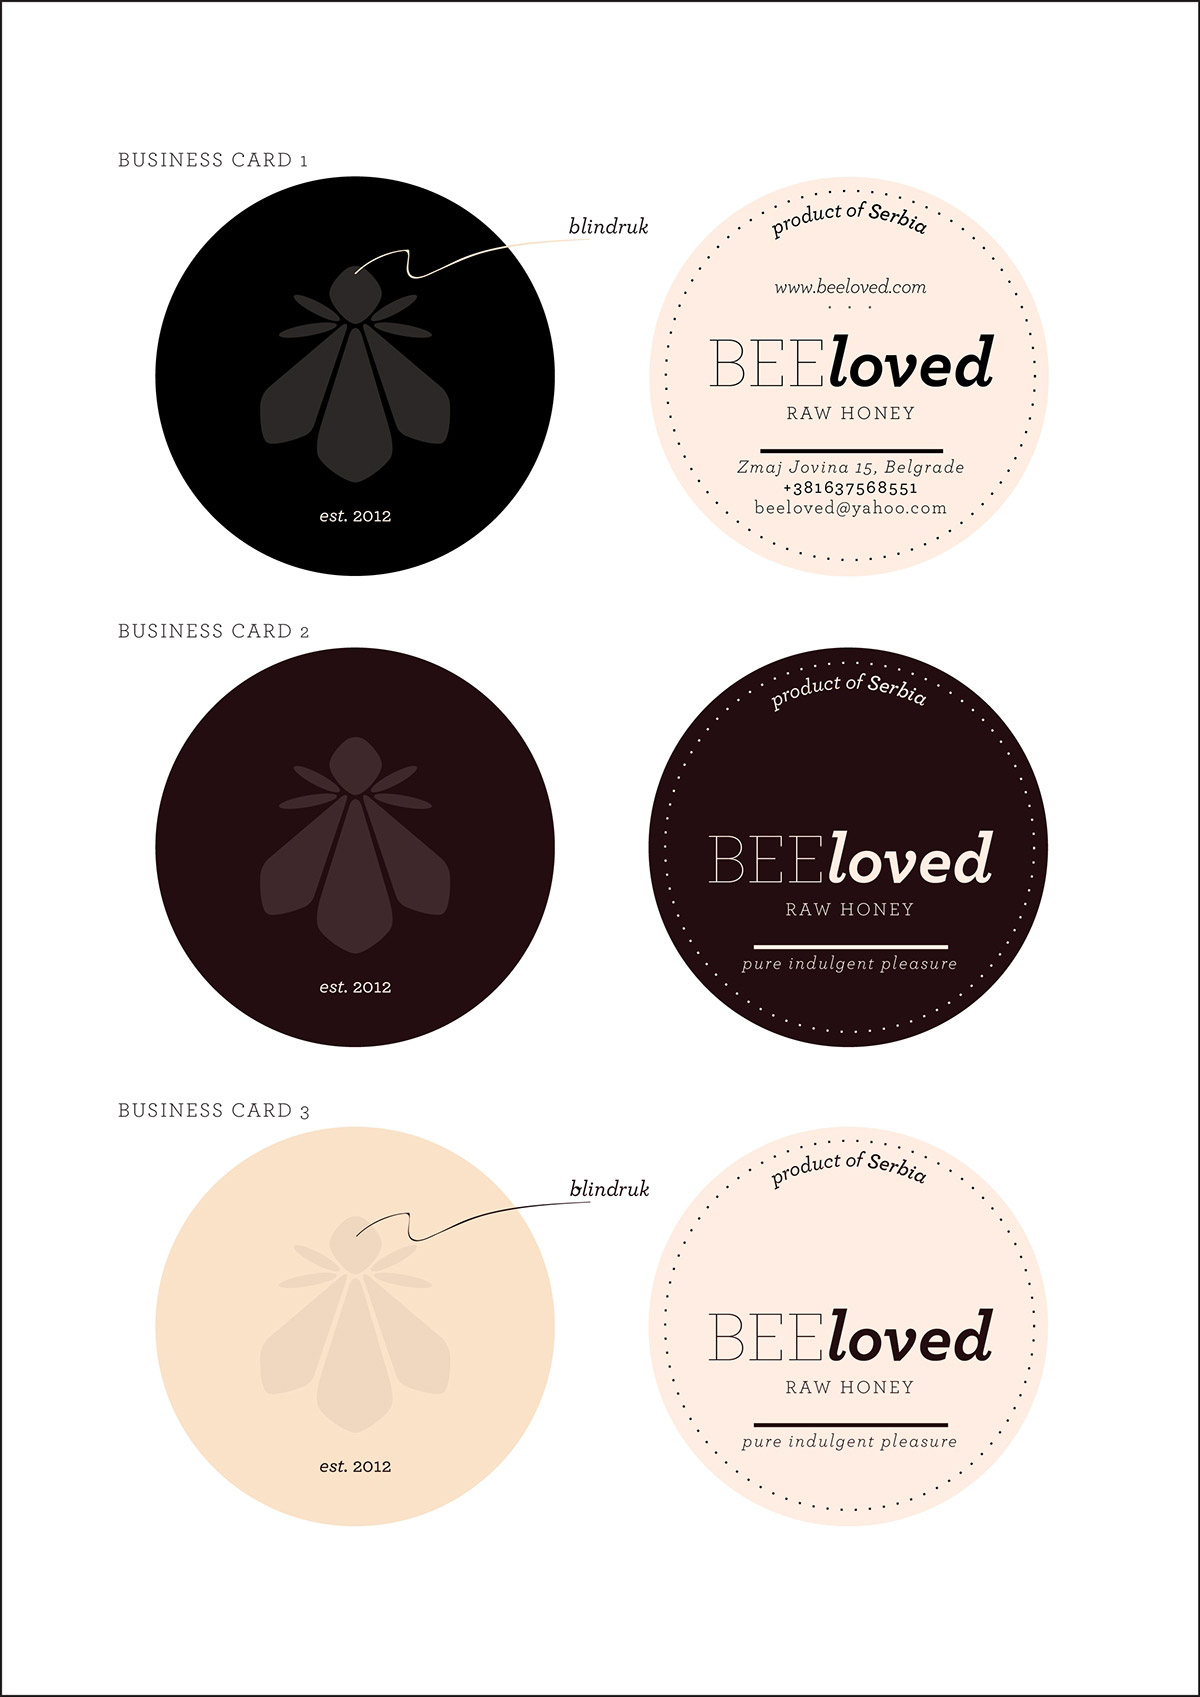 BEEloved honey蜂蜜创意包装设计卡片